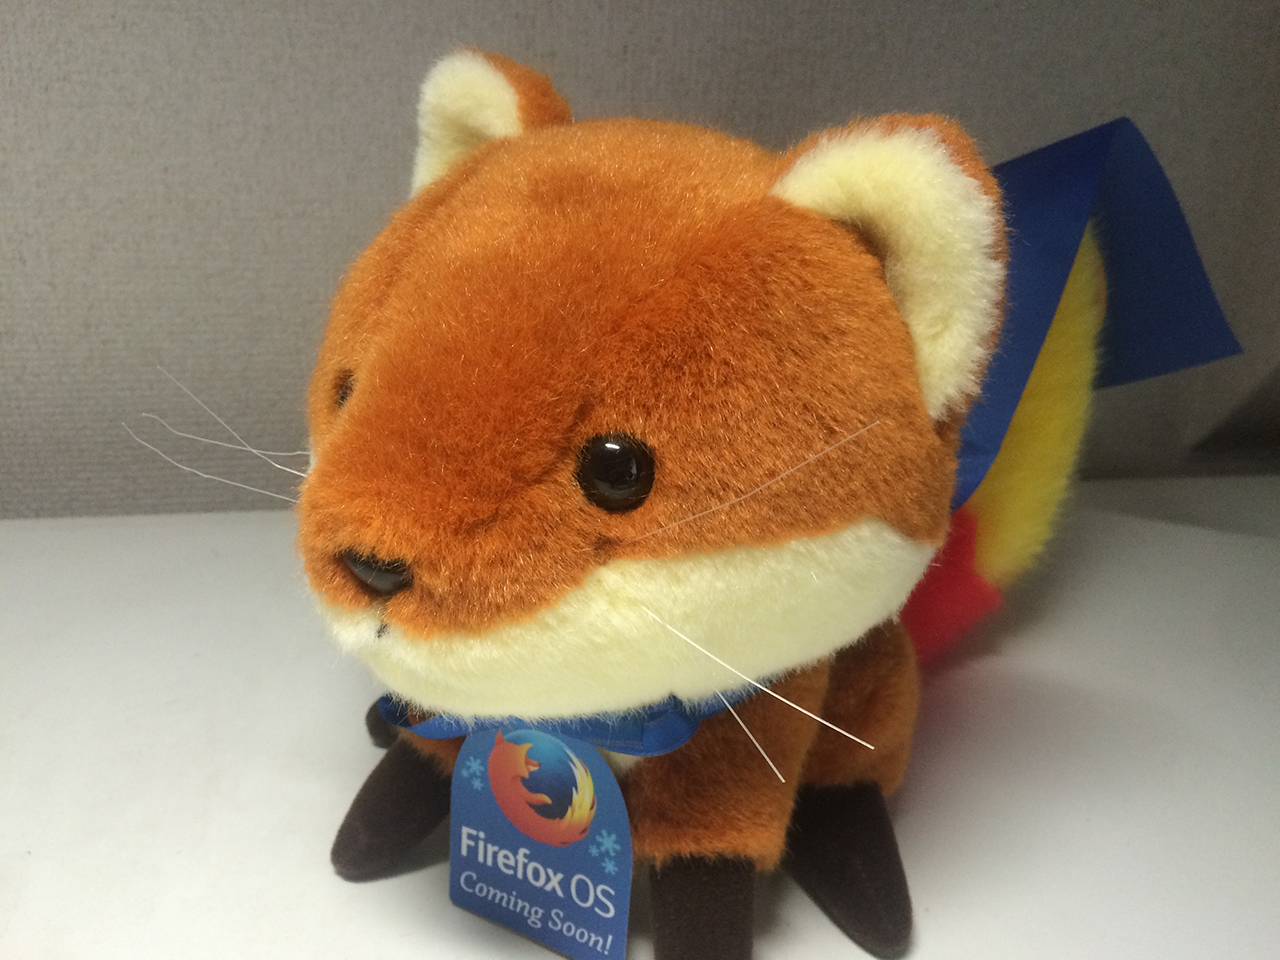 Mozillajapanがfirefox Osのデビューをフォクすけと祝うキャンペーンを実施中 すまほん